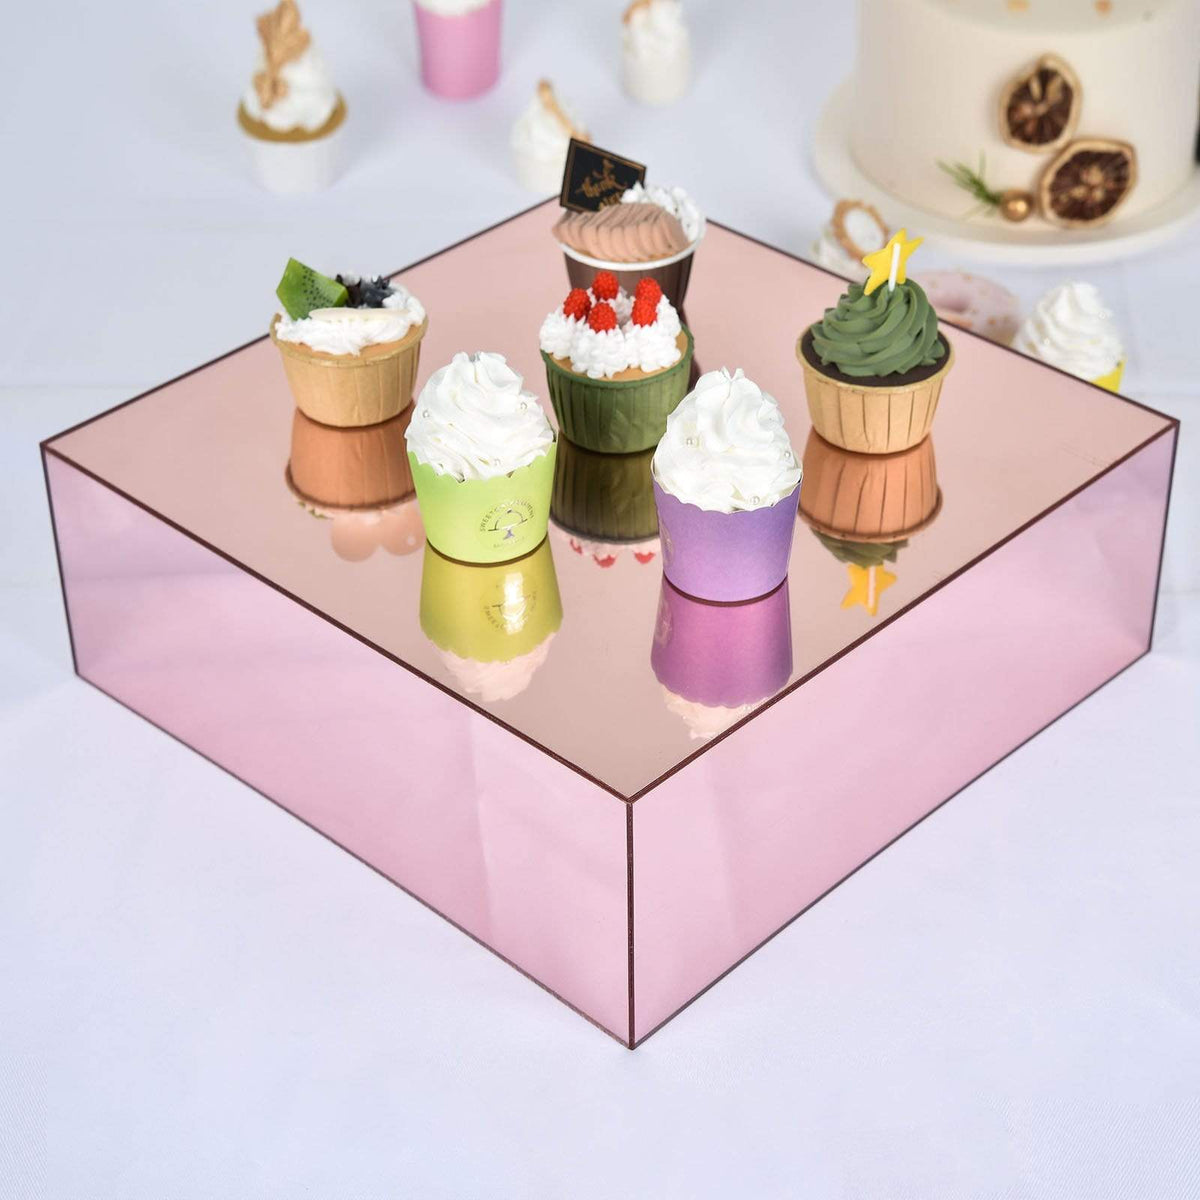 Clear Acrylic Cake Stand | Style Me Pretty - Gartner Studios